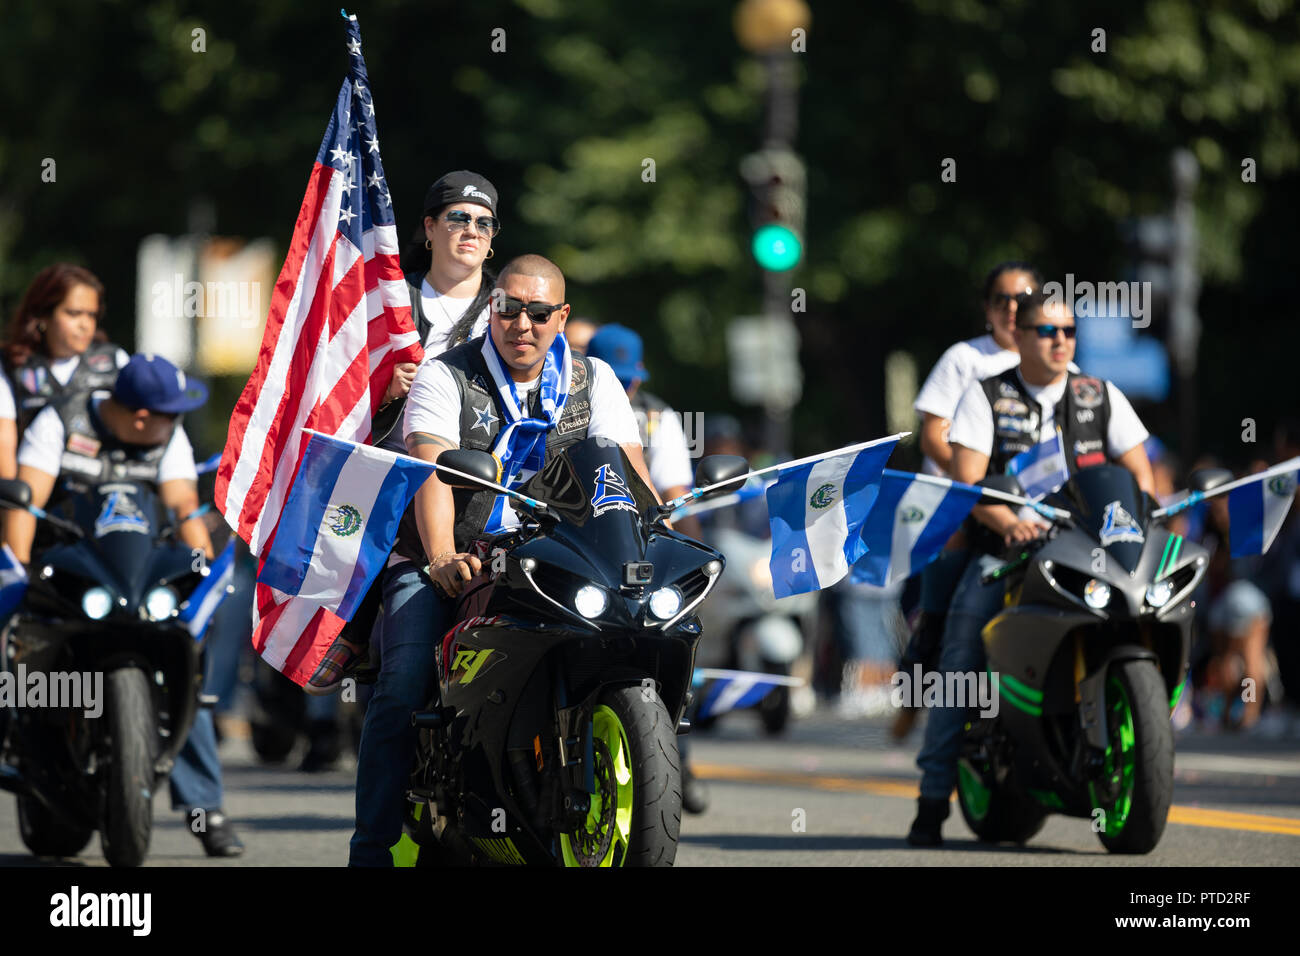 Washington, D.C., USA - September 29, 2018: The Fiesta DC Parade, Bikers from El Salvador carrying El Salvadoran Flags and the American Flag Stock Photo